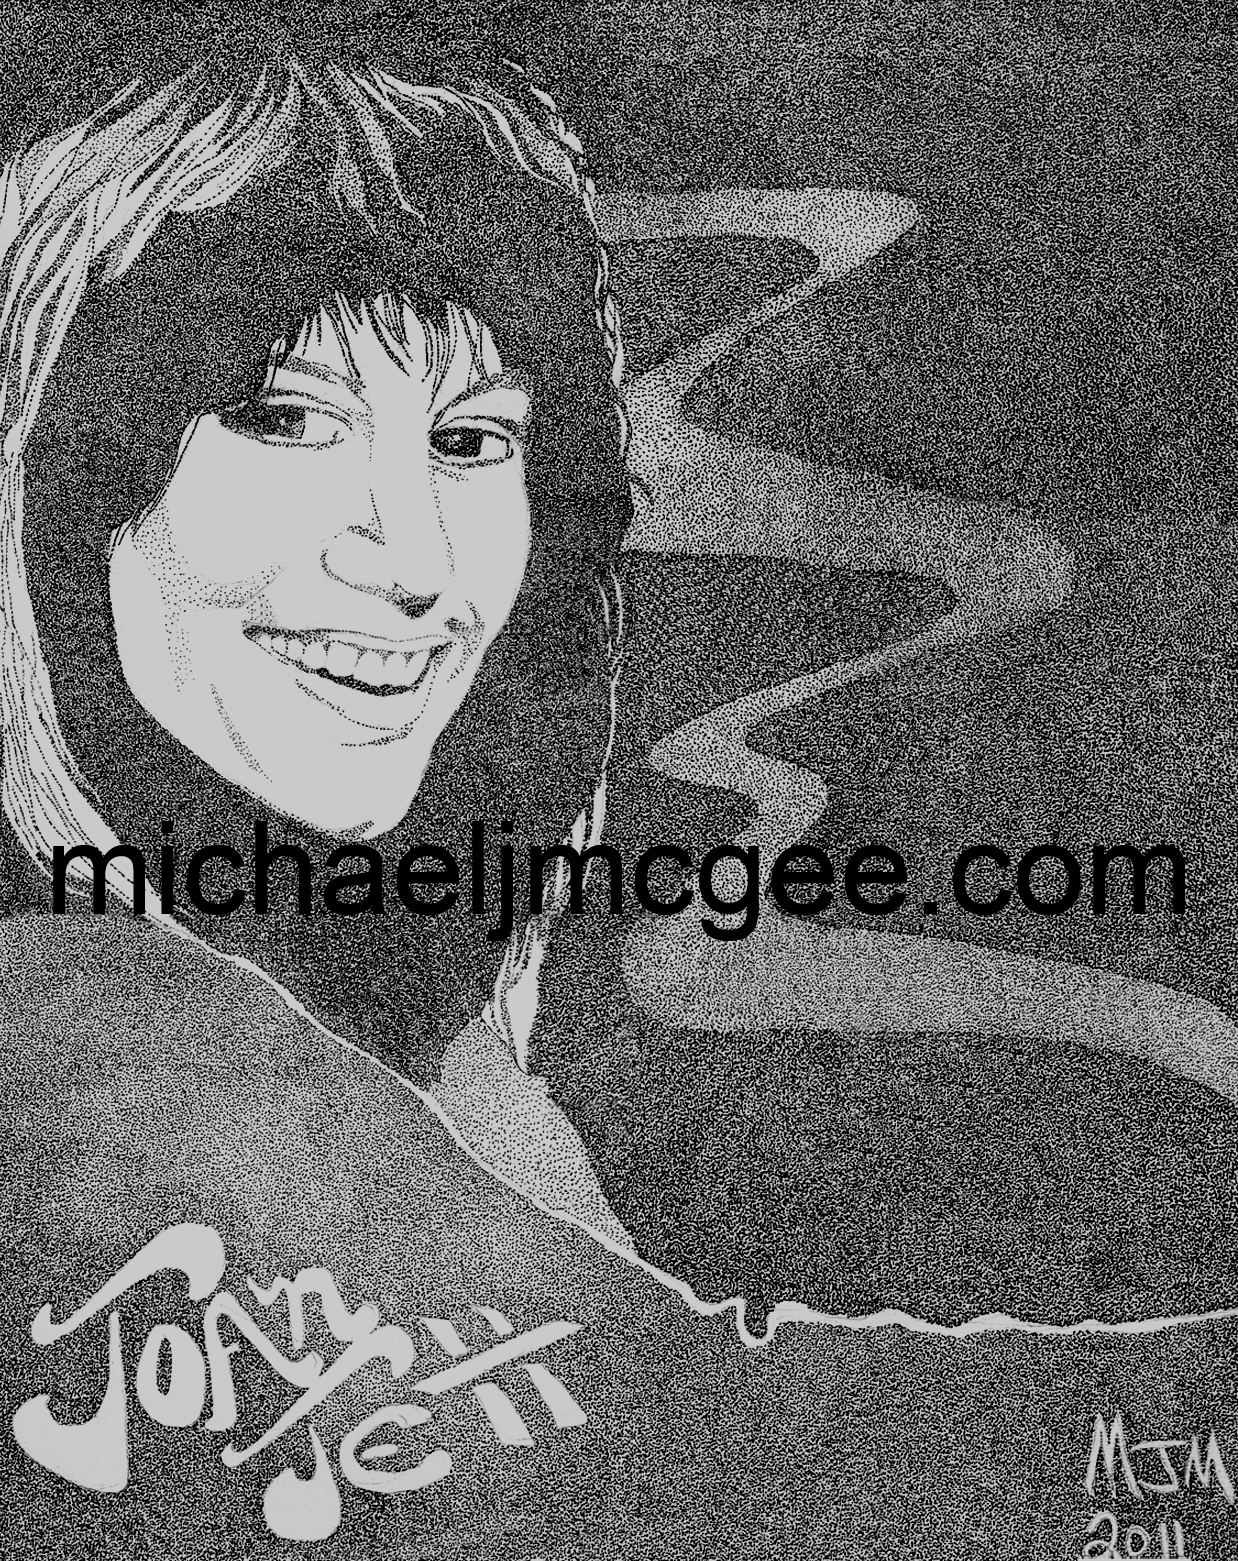 Joan Jett / MJM Artworks / michaeljmcgee.com